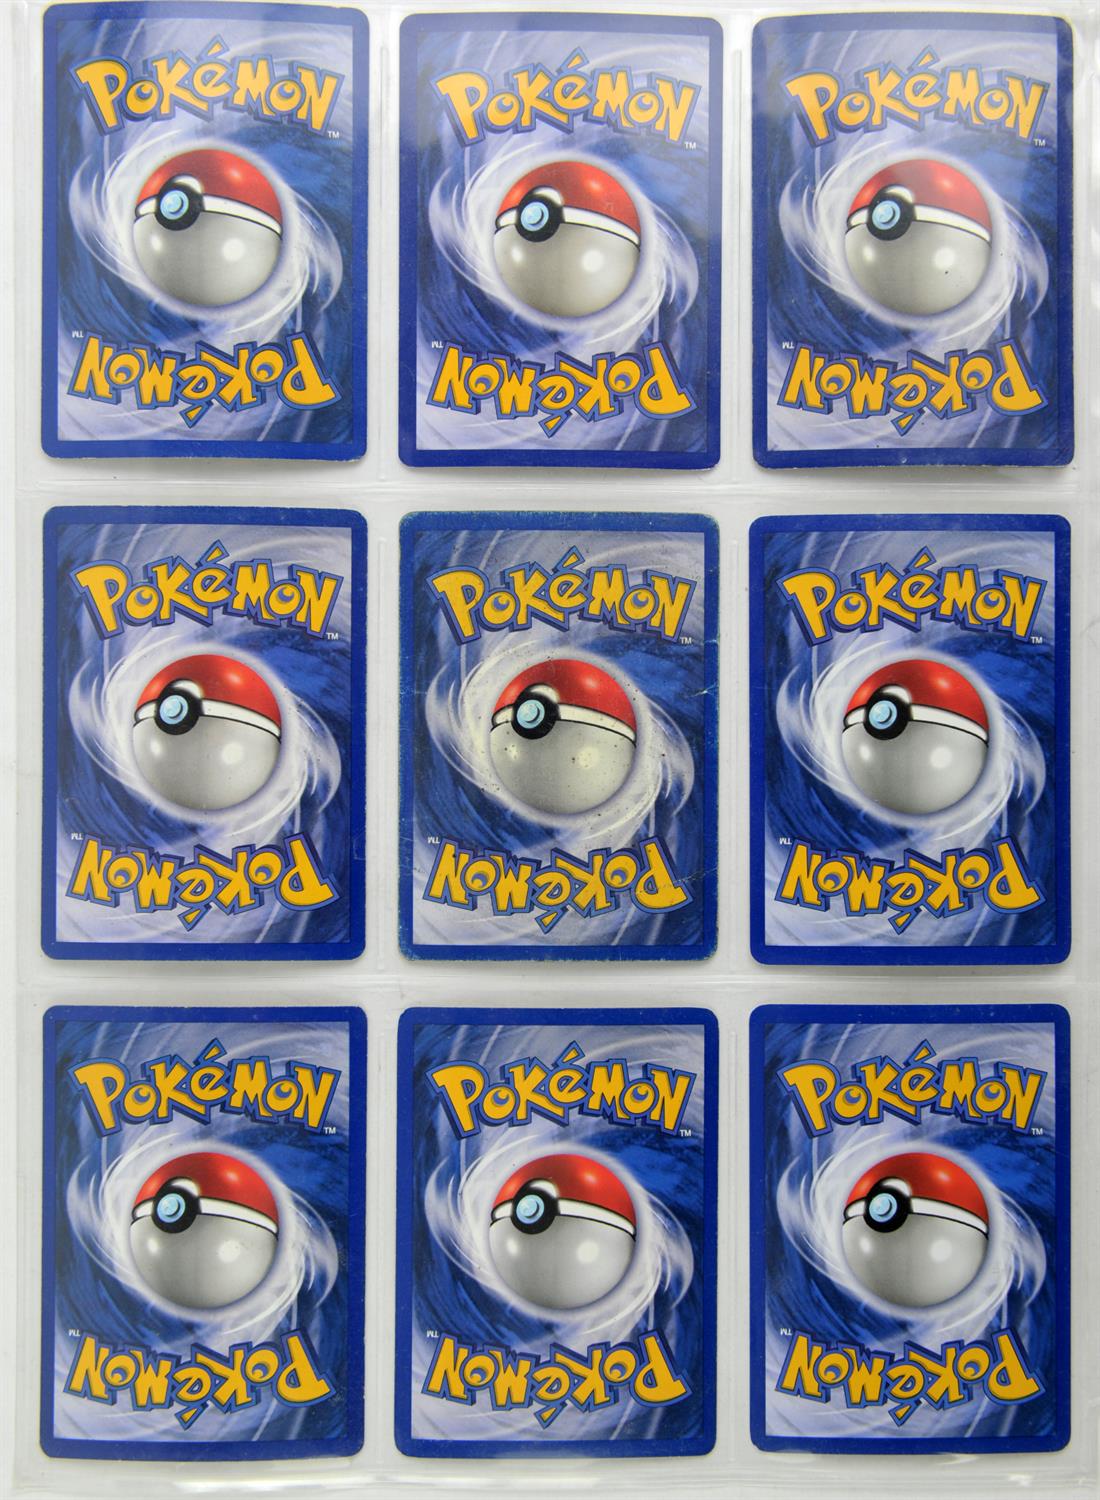 Pokemon TCG. Lot of around 60-70 vintage Pokémon cards from Base, Jungle, Fossil, - Image 4 of 16